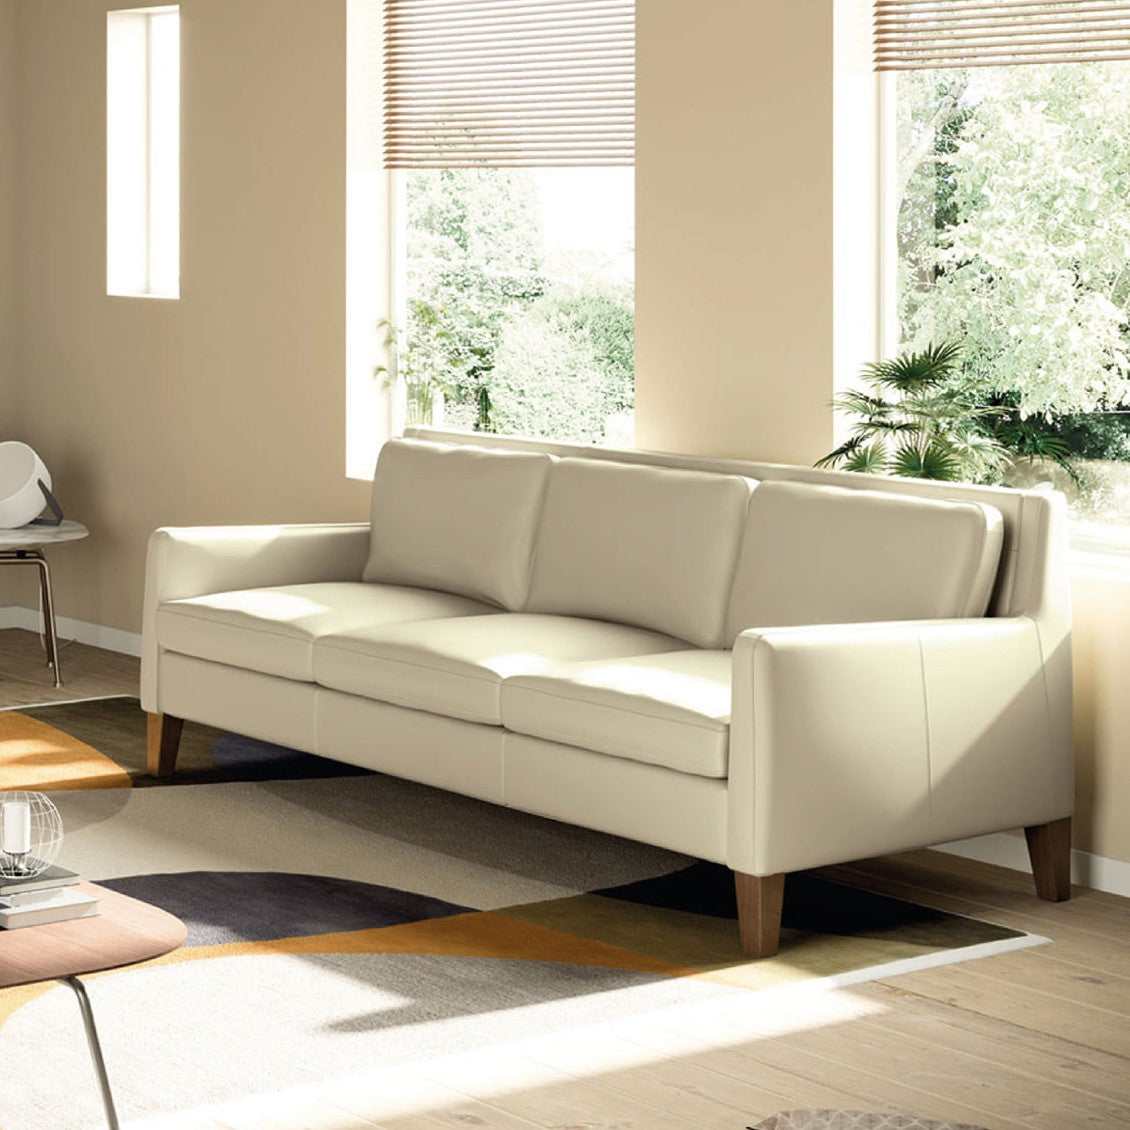 Natuzzi Editions Quiete C009 Modular Sofa. Available from your Natuzzi Stockist Make Your House A Home, Bendigo, Victoria. Australia wide delivery to Melbourne. Italian leather.